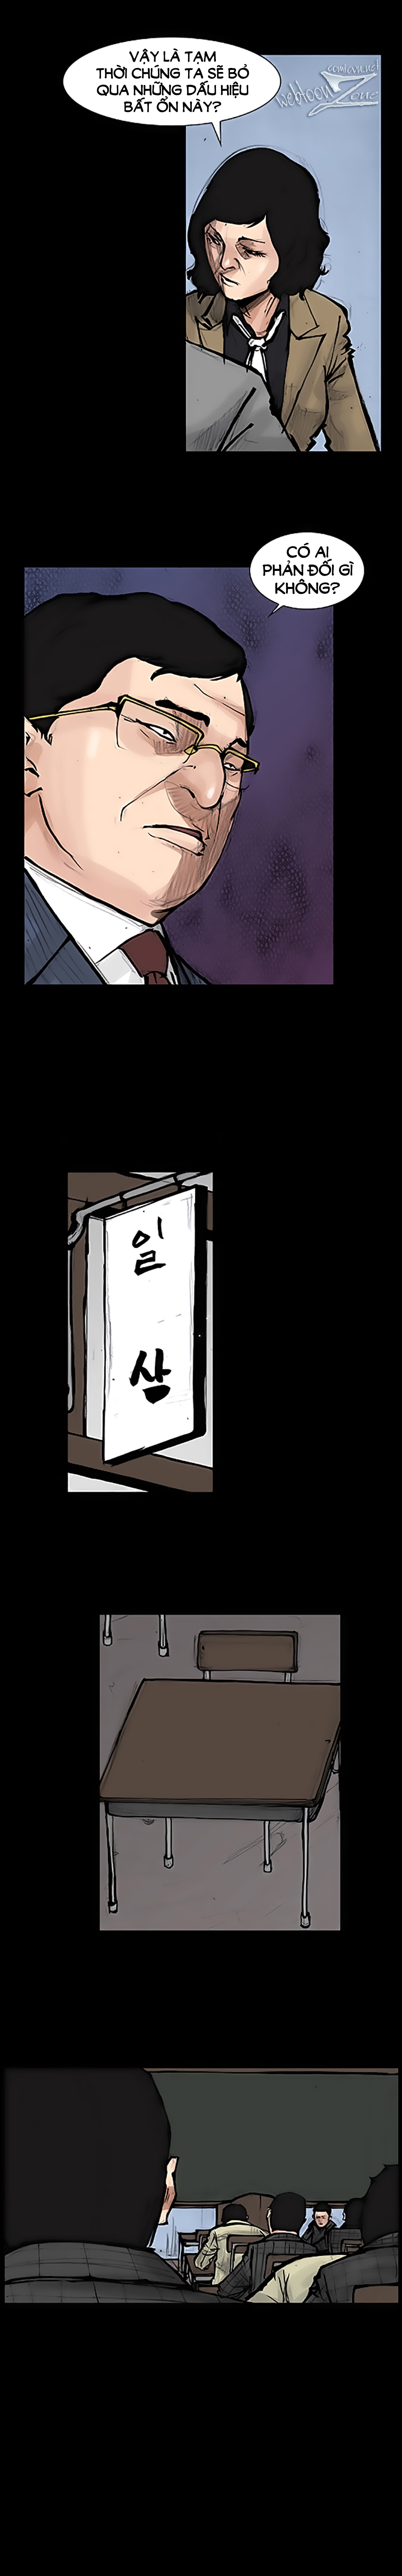 Dokgo Rewind kỳ 20 trang 6